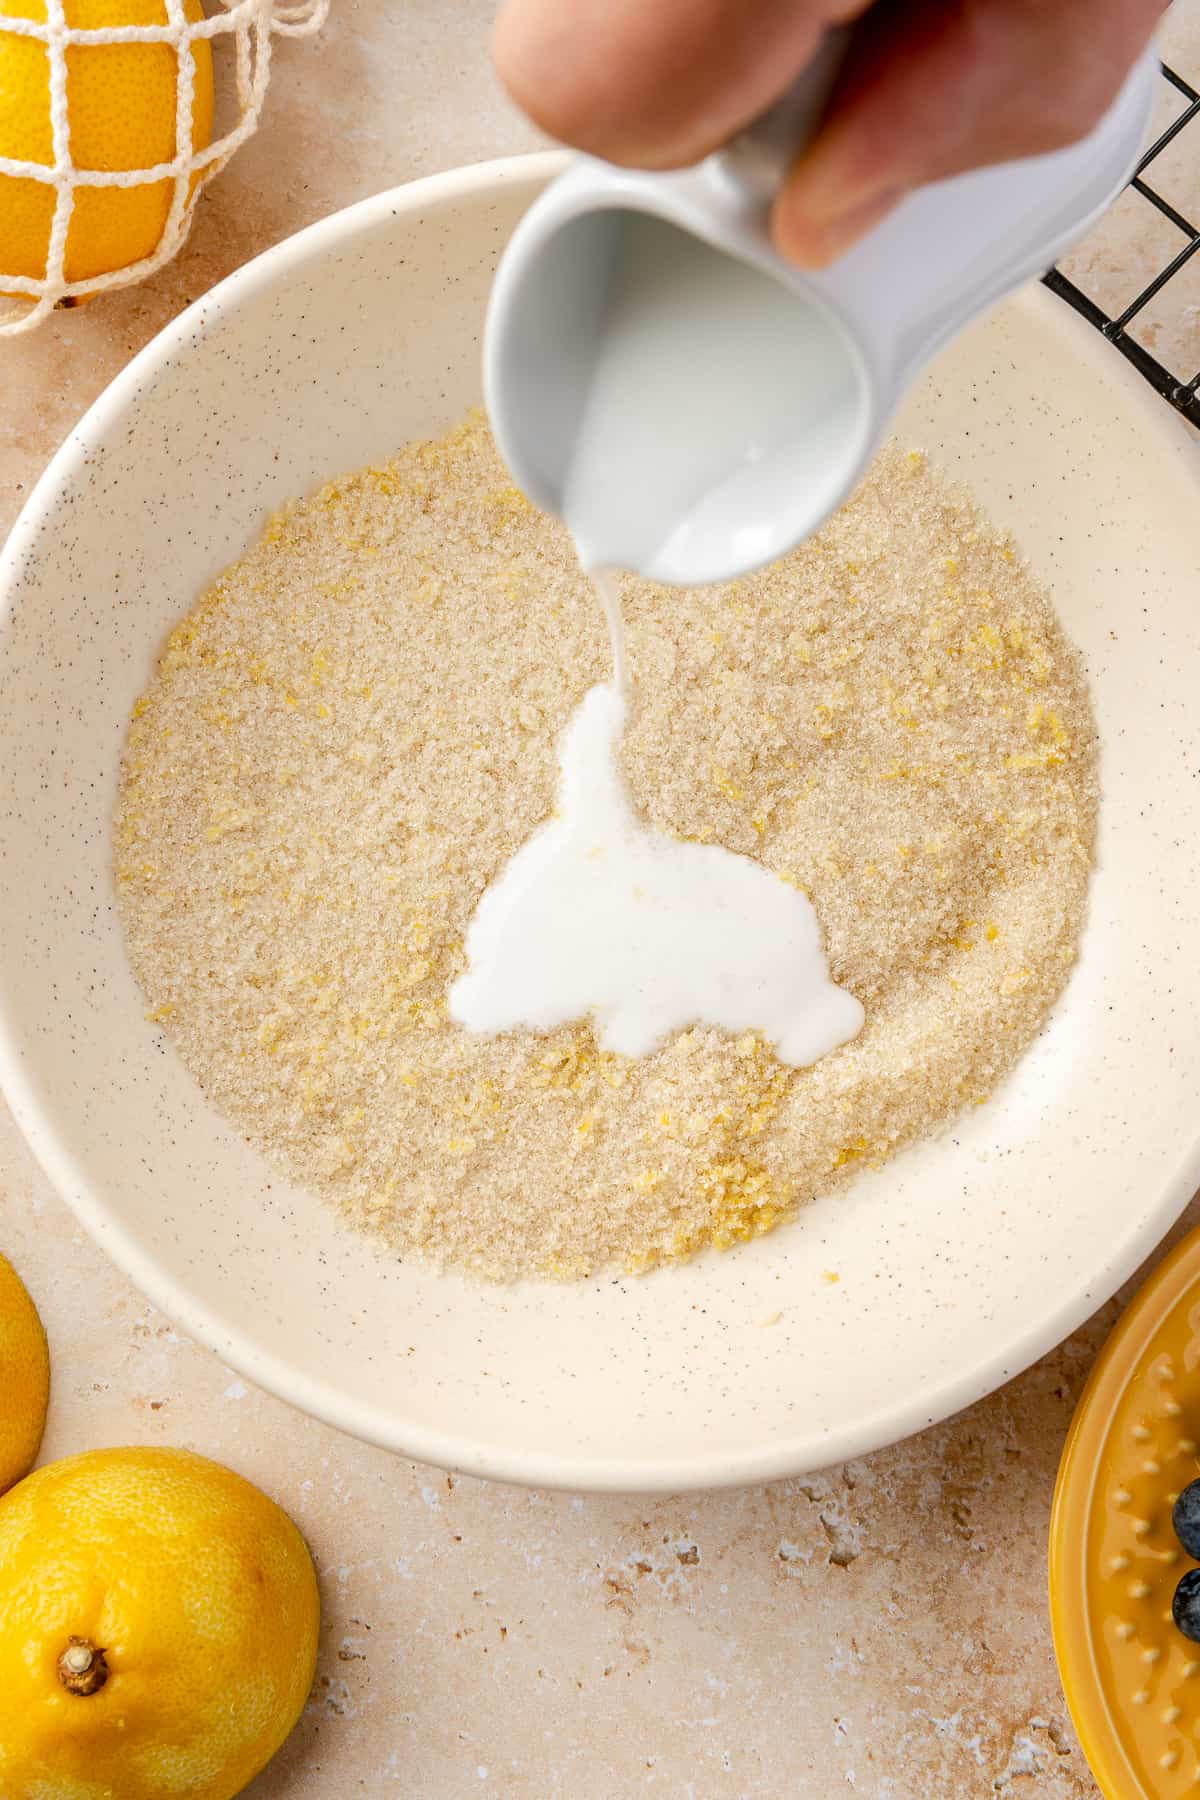 Buttermilk pouring into bowl of lemon zest and sugar mixture. 